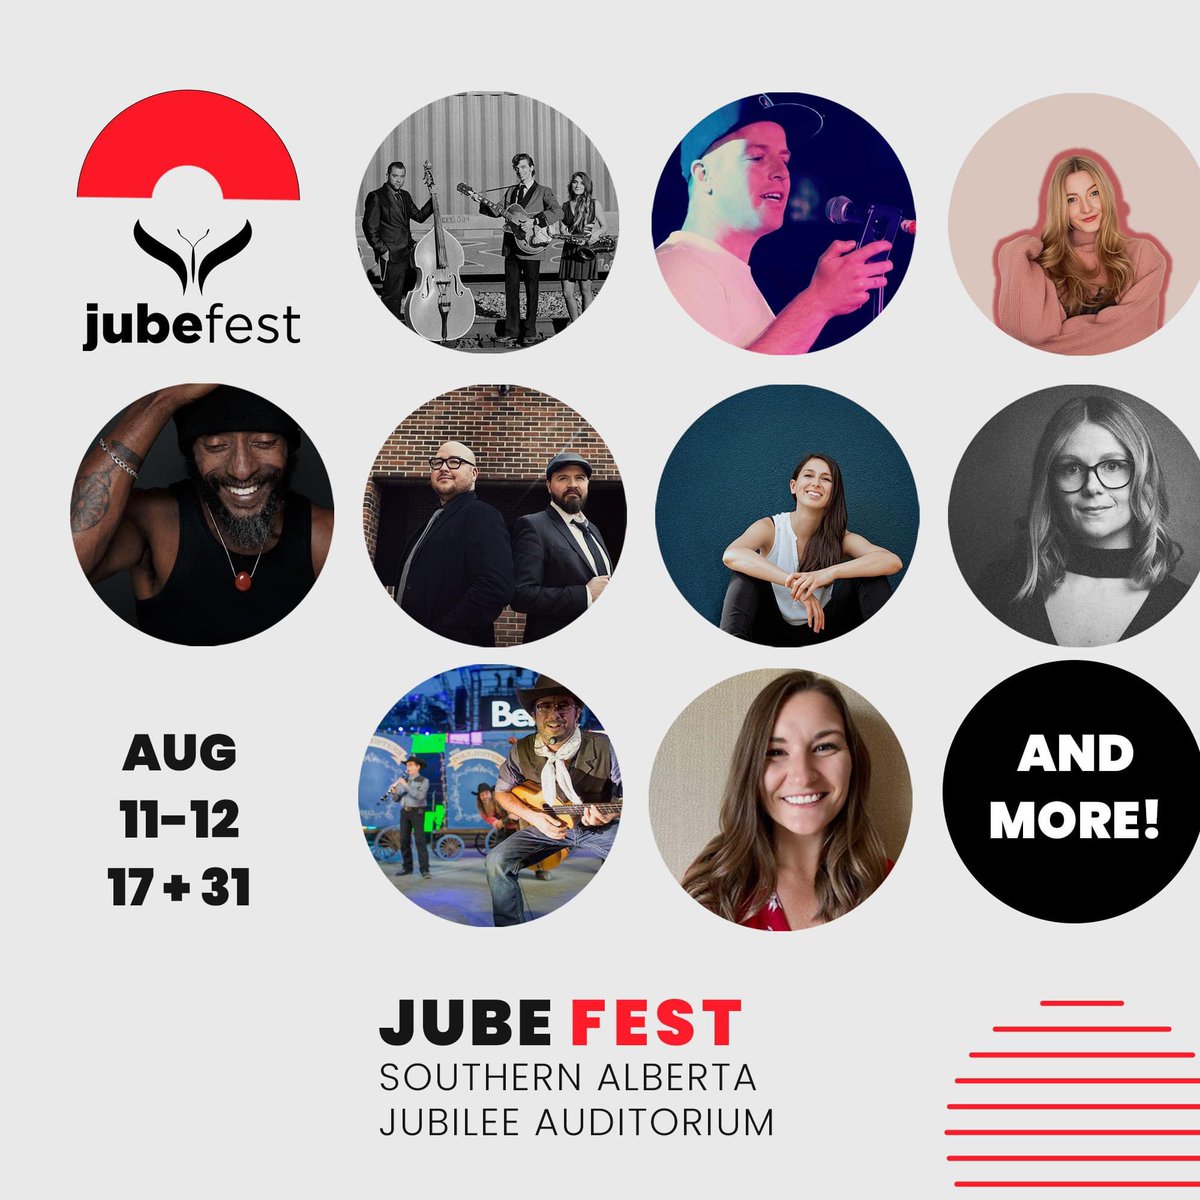 Jubefest!
An amazing line-up of Alberta’s best musicians and poets at the Jubilees. $20 a ticket! Details & tickets at jubileeauditorium.com 
@thepolyjesters @dino_martinis @caitygyorgy @ArloMaverick @OperaNUOVA @mouraine_ @jorykinjo @aaronyoung04 @6MinuteWarning @apocalypsekow